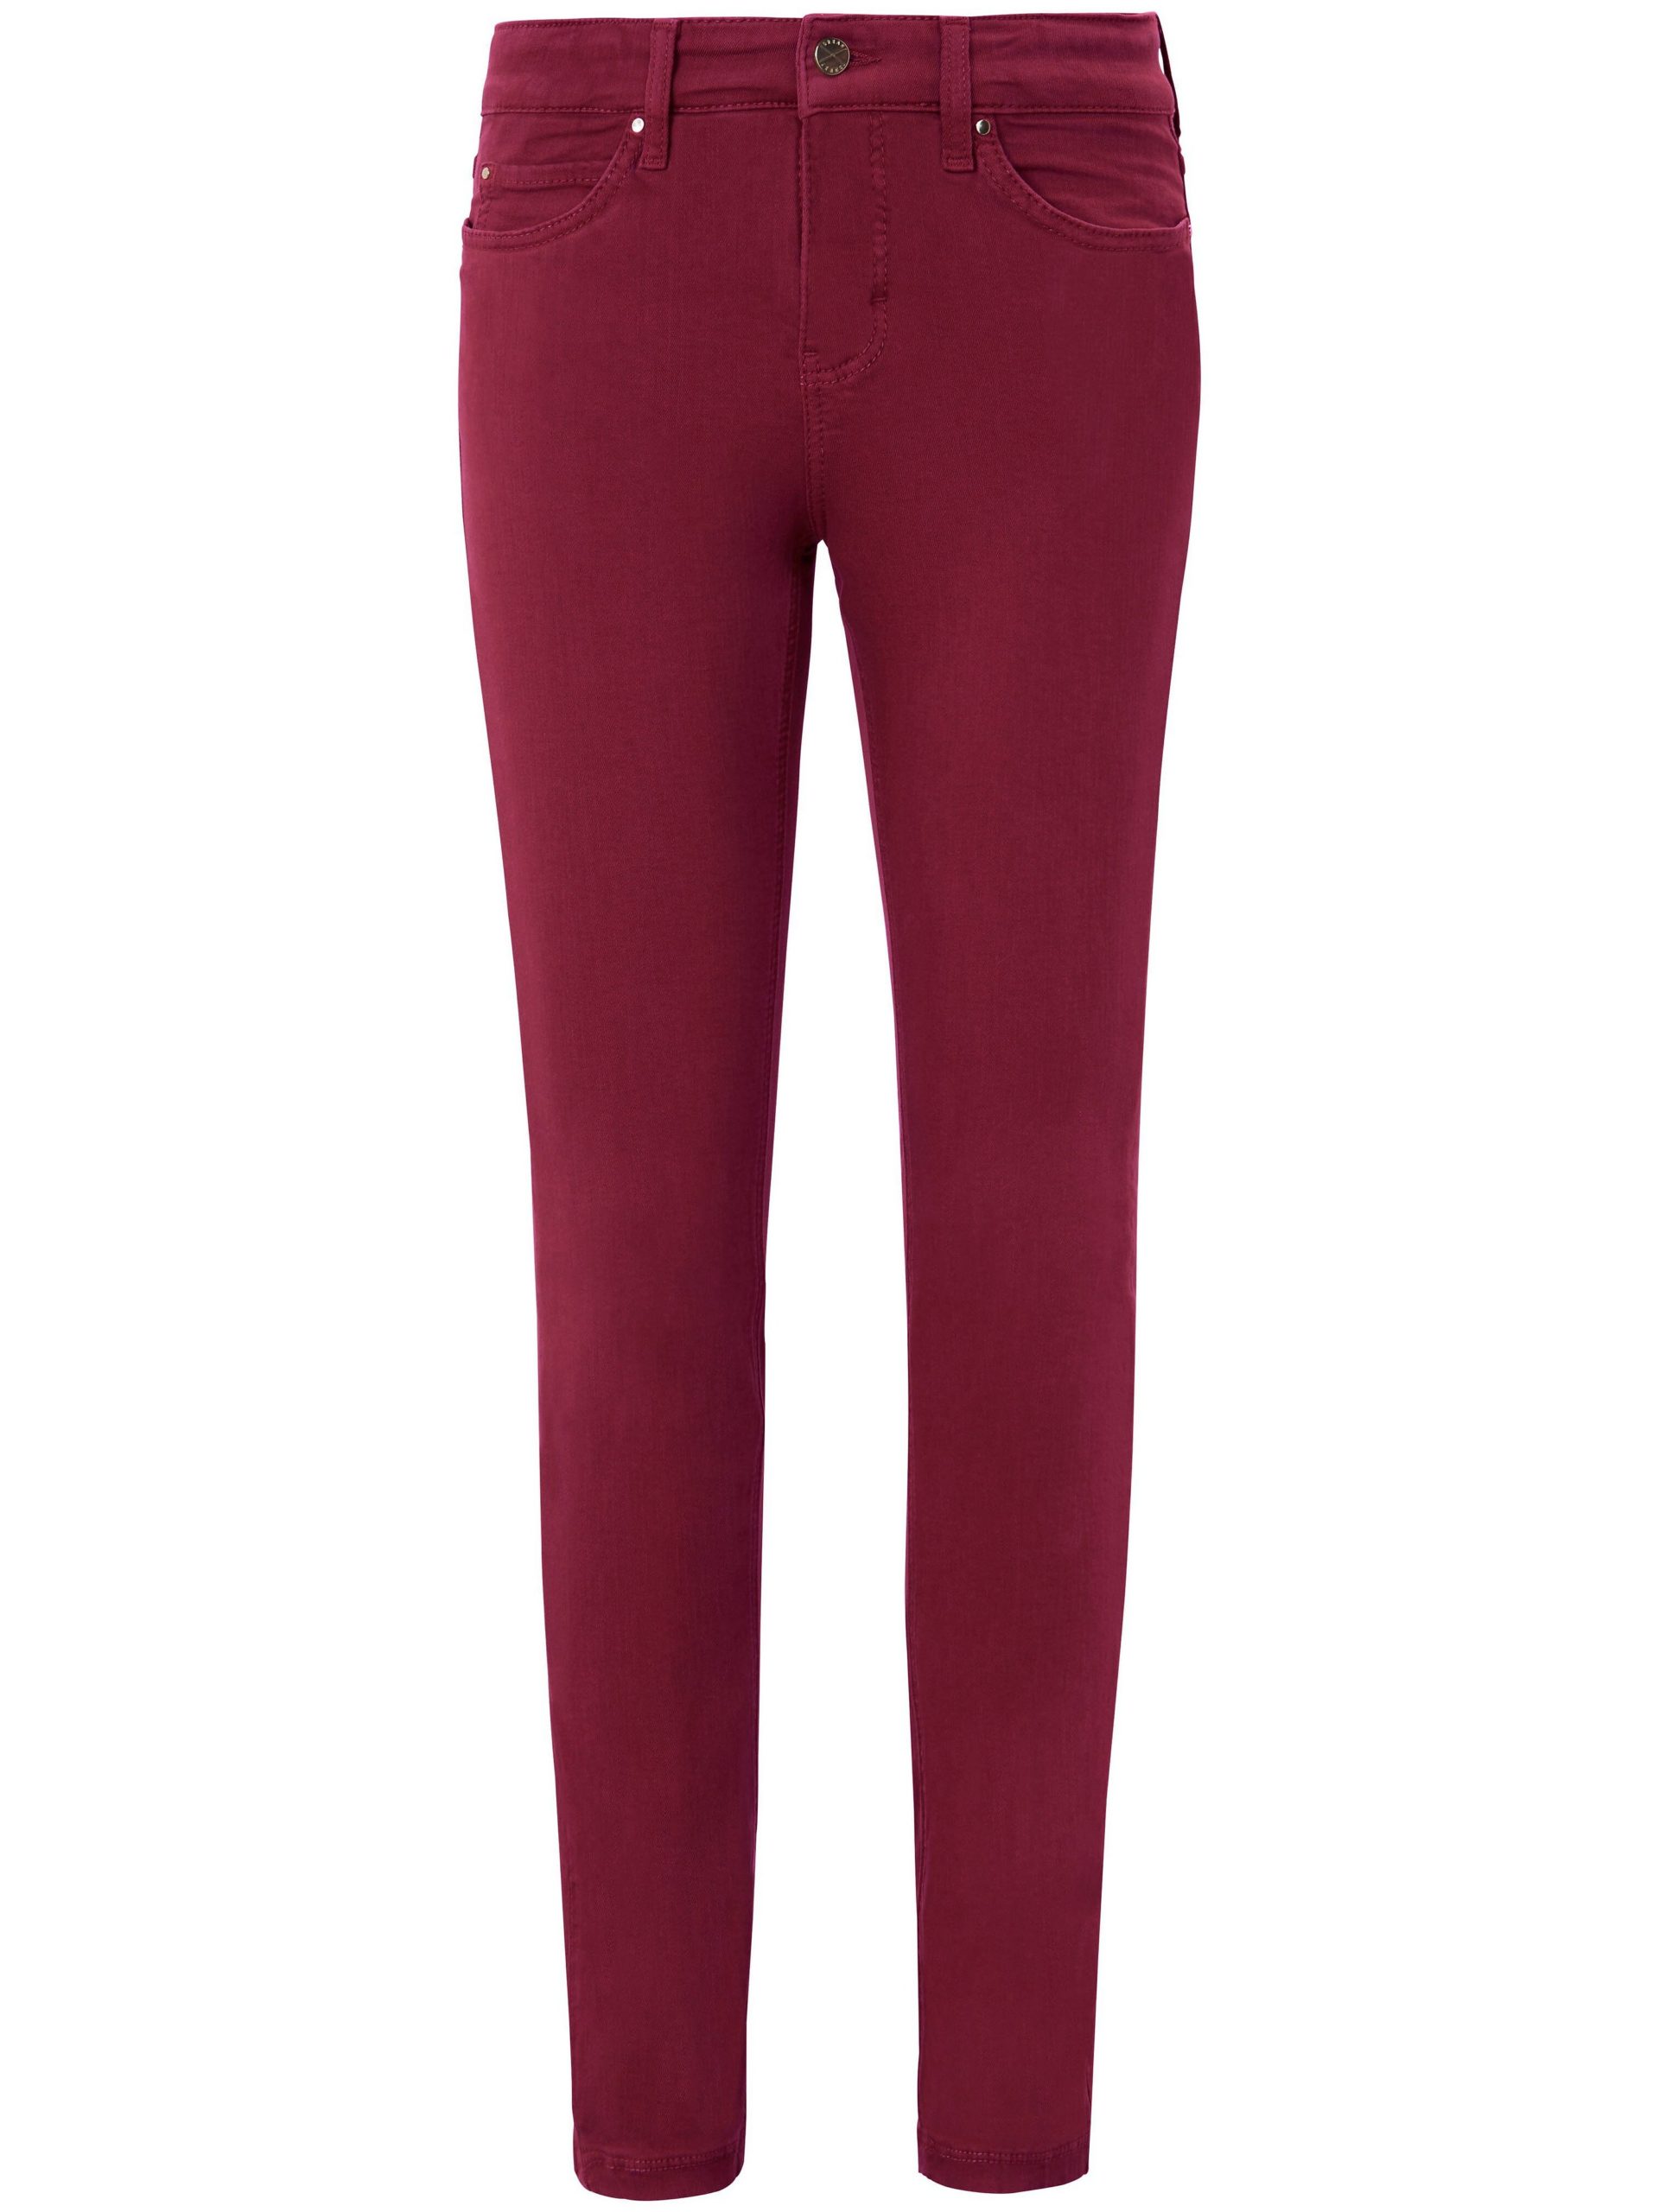 Jeans, model Dream Skinny, lengte 28 inch Van Mac rood Kopen